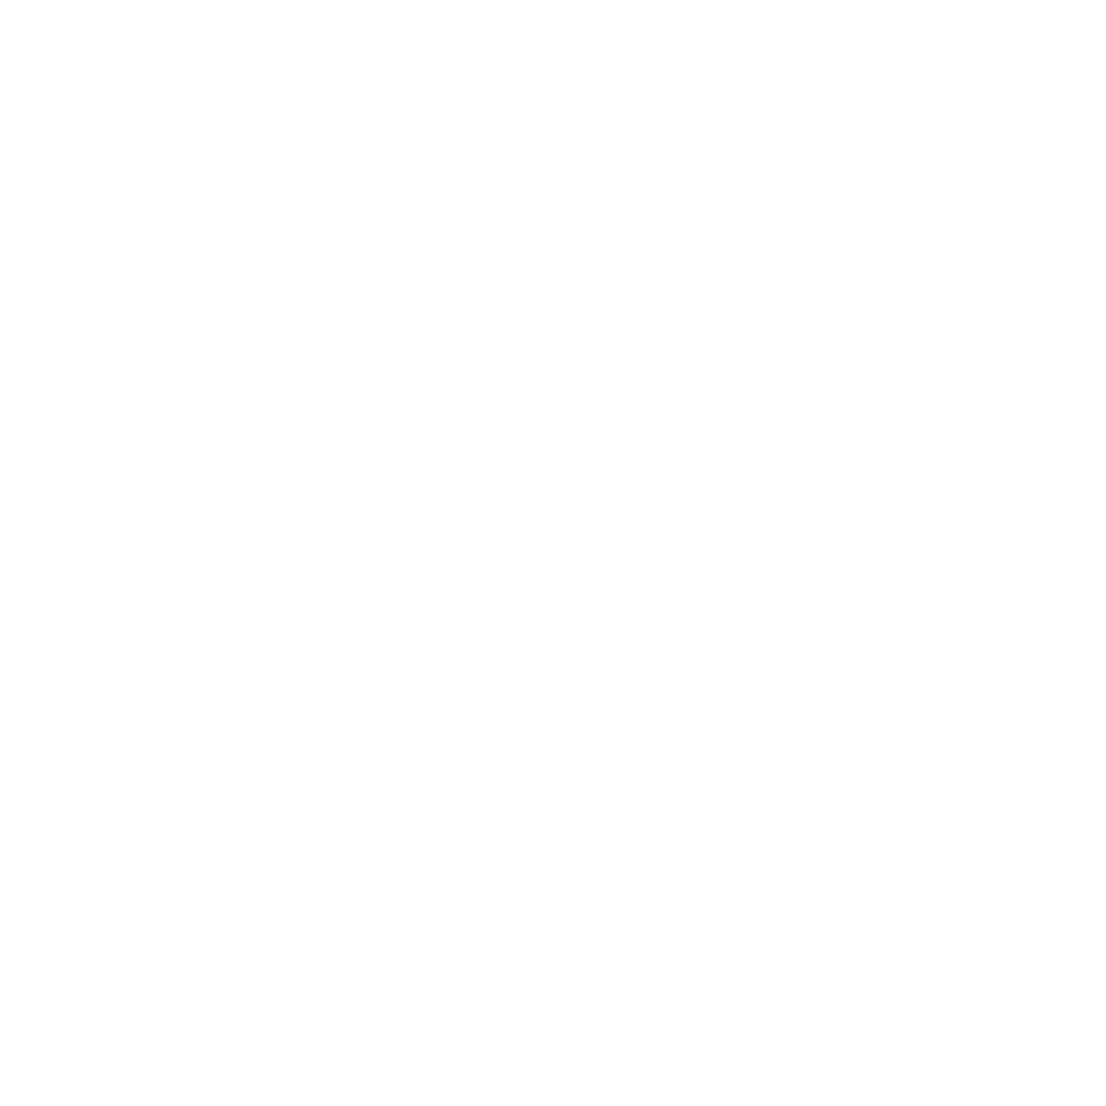 DC Elopements - Elope in Washington DC